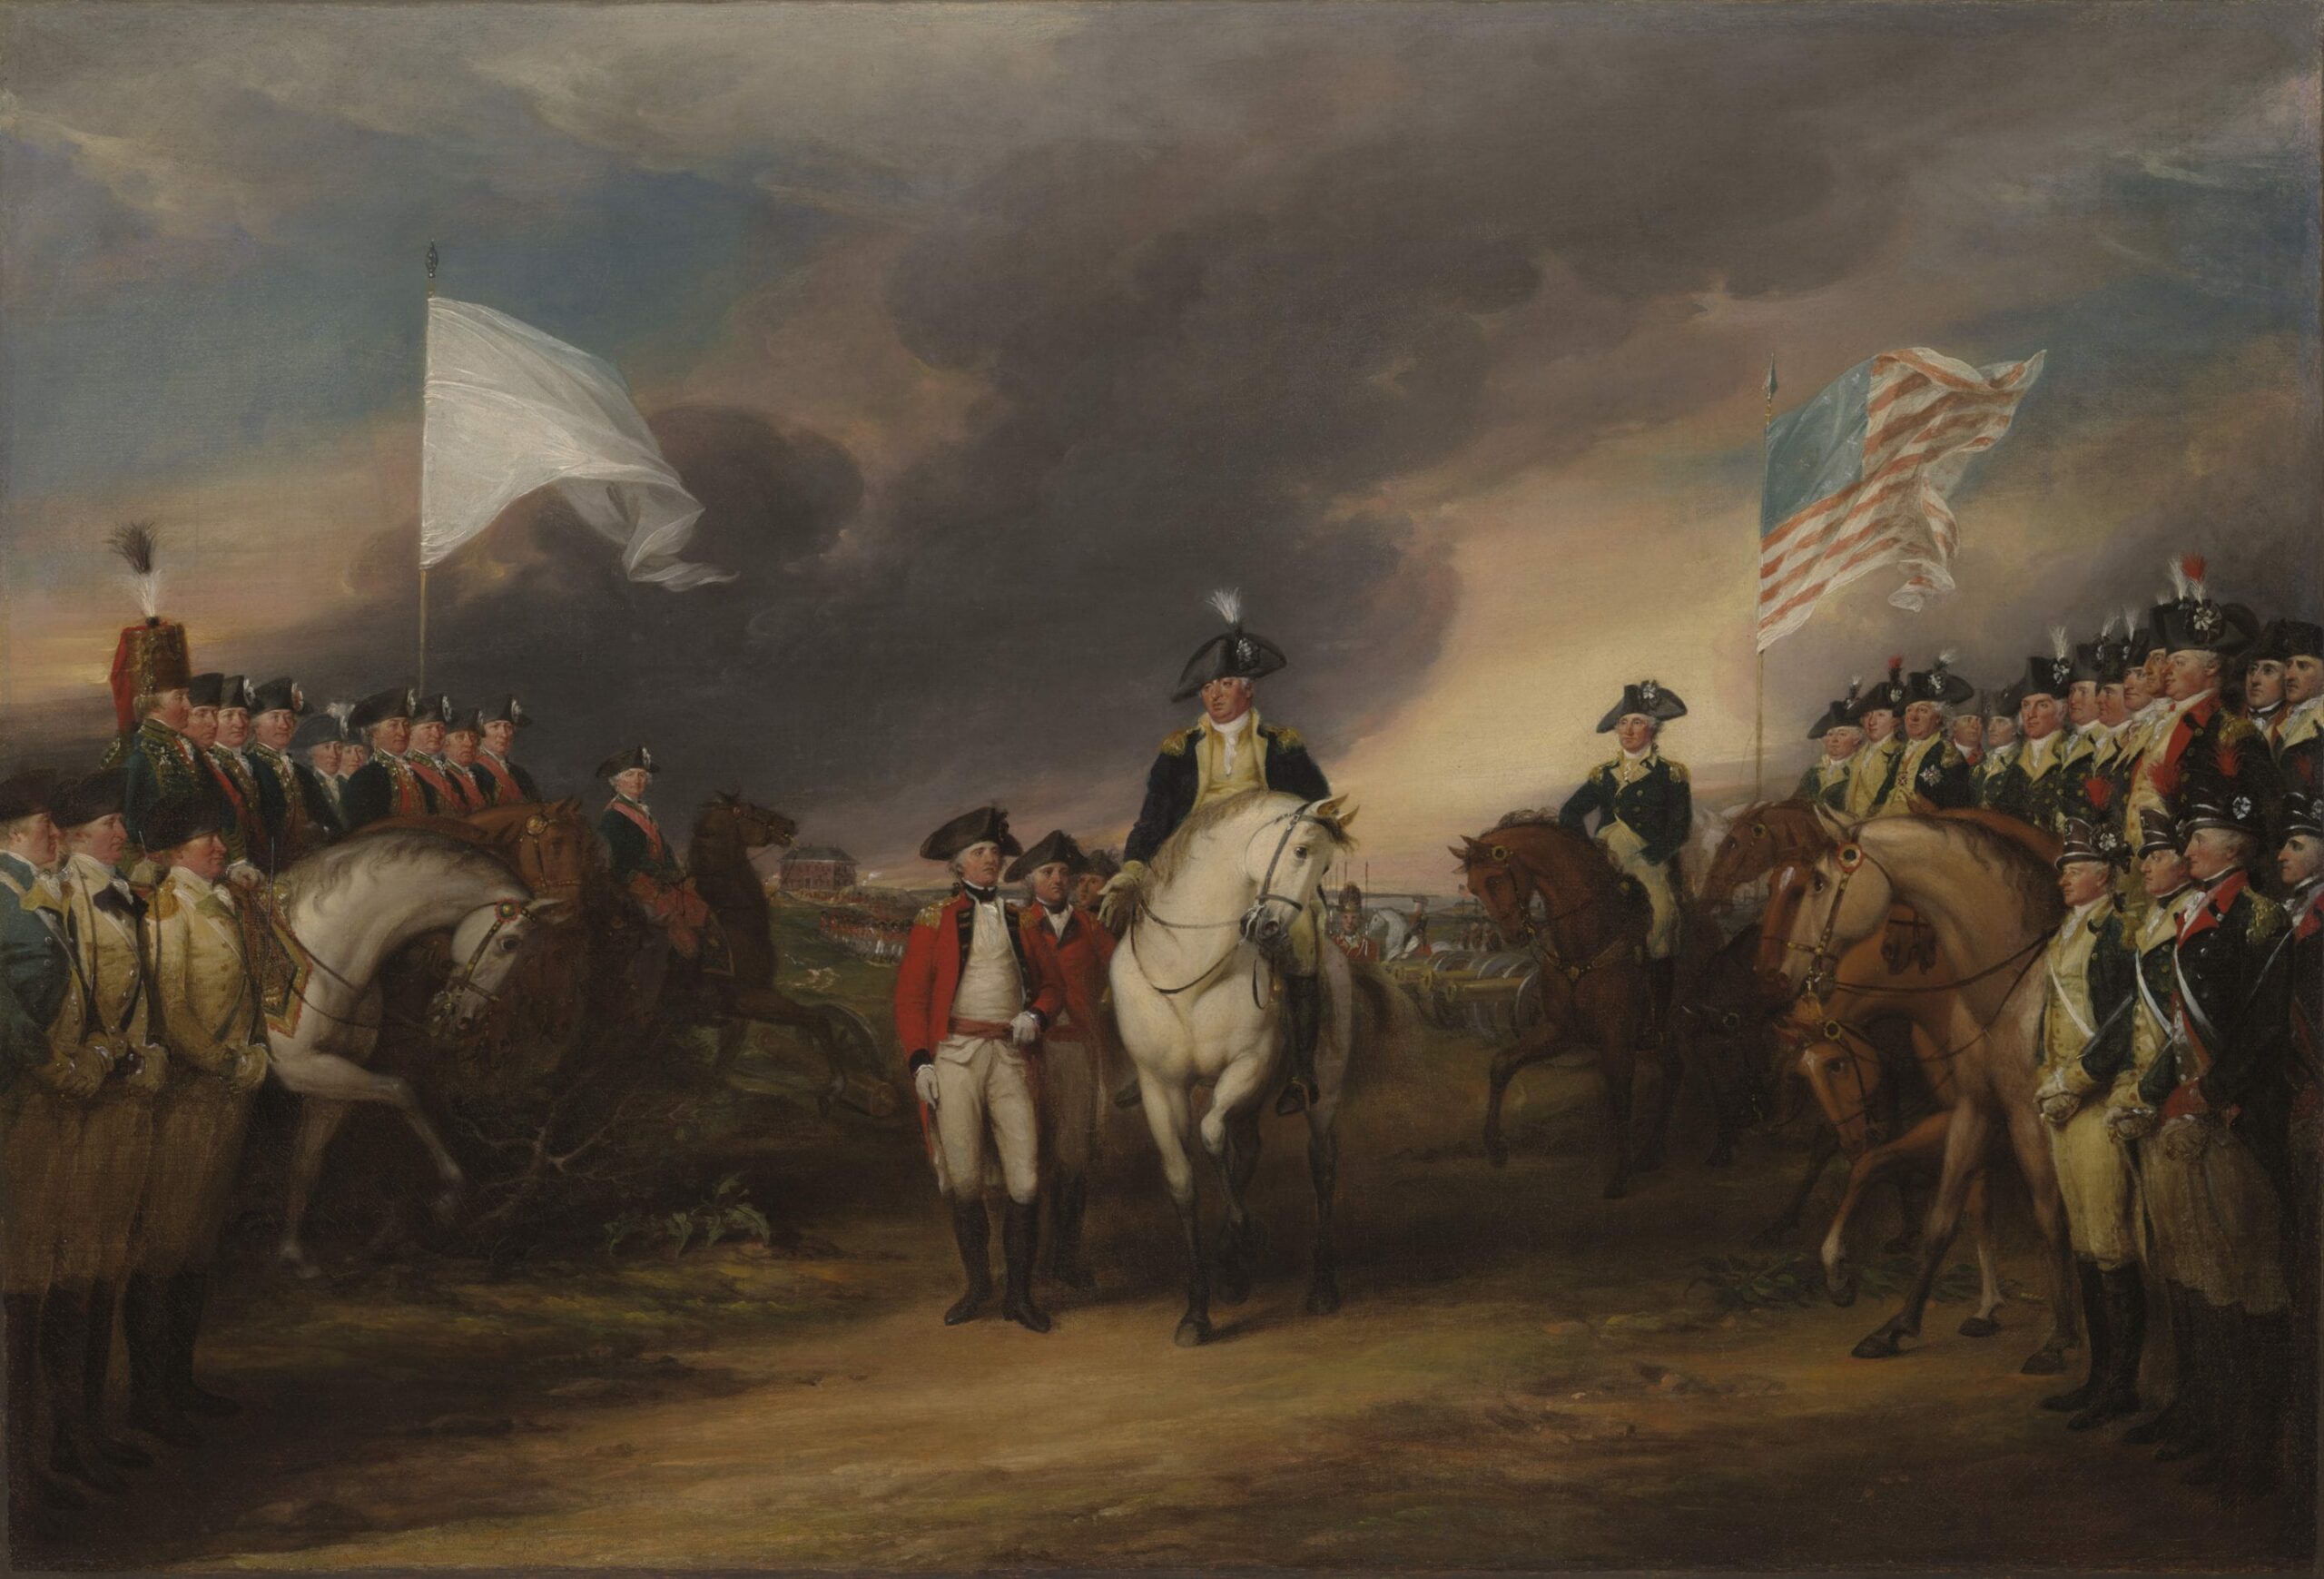 Two Congressional Presentation Swords - The American Revolution